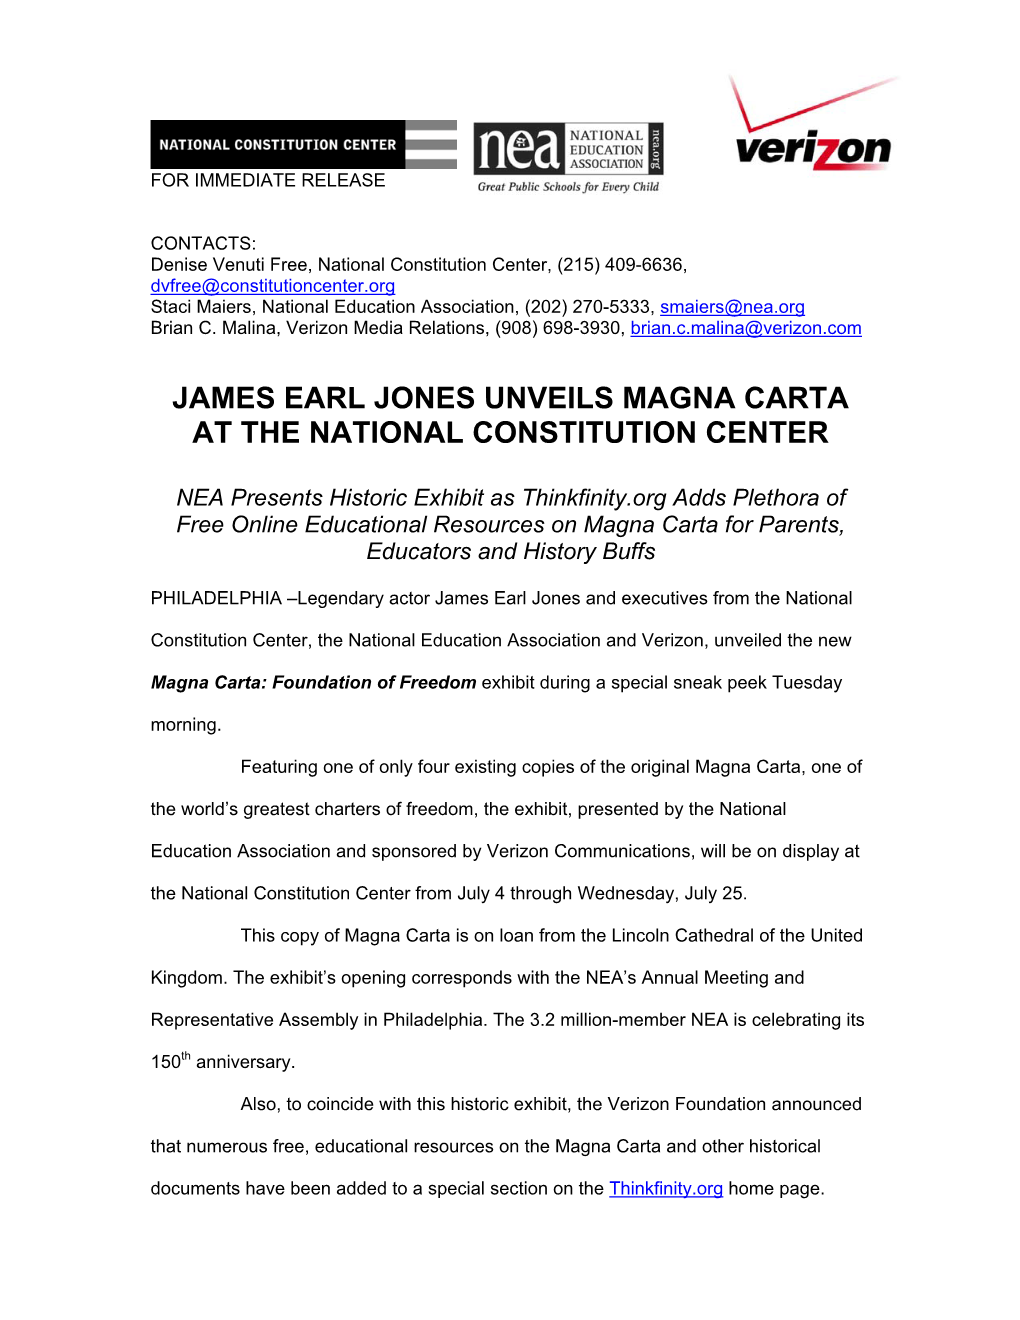 James Earl Jones Unveils Magna Carta at the National Constitution Center